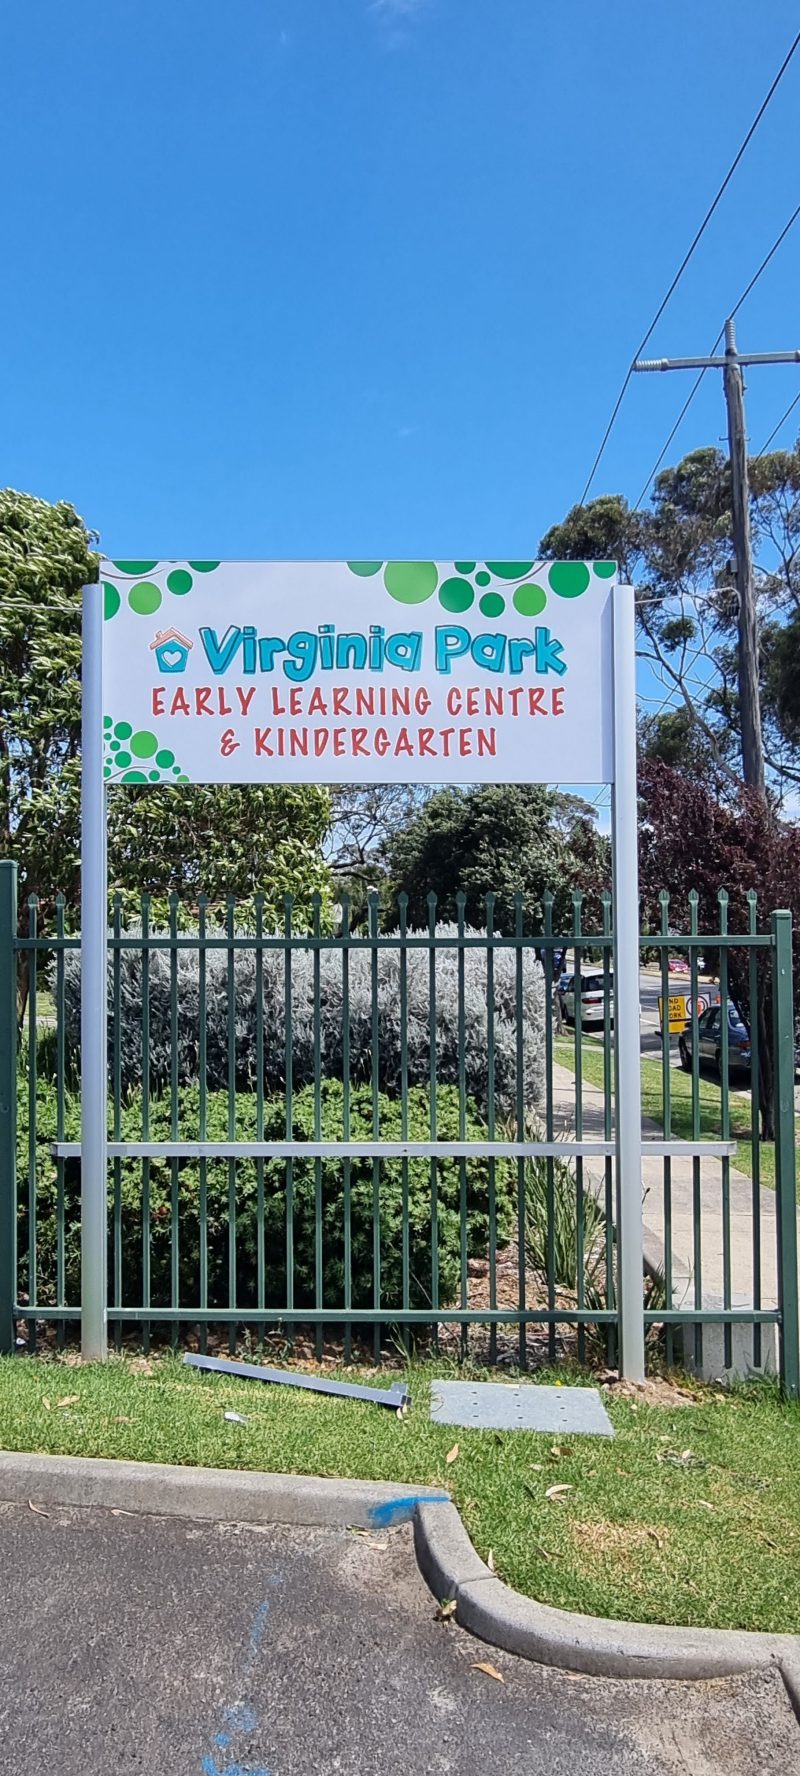 Virginia Park Early Learning Centre & Kindergarten